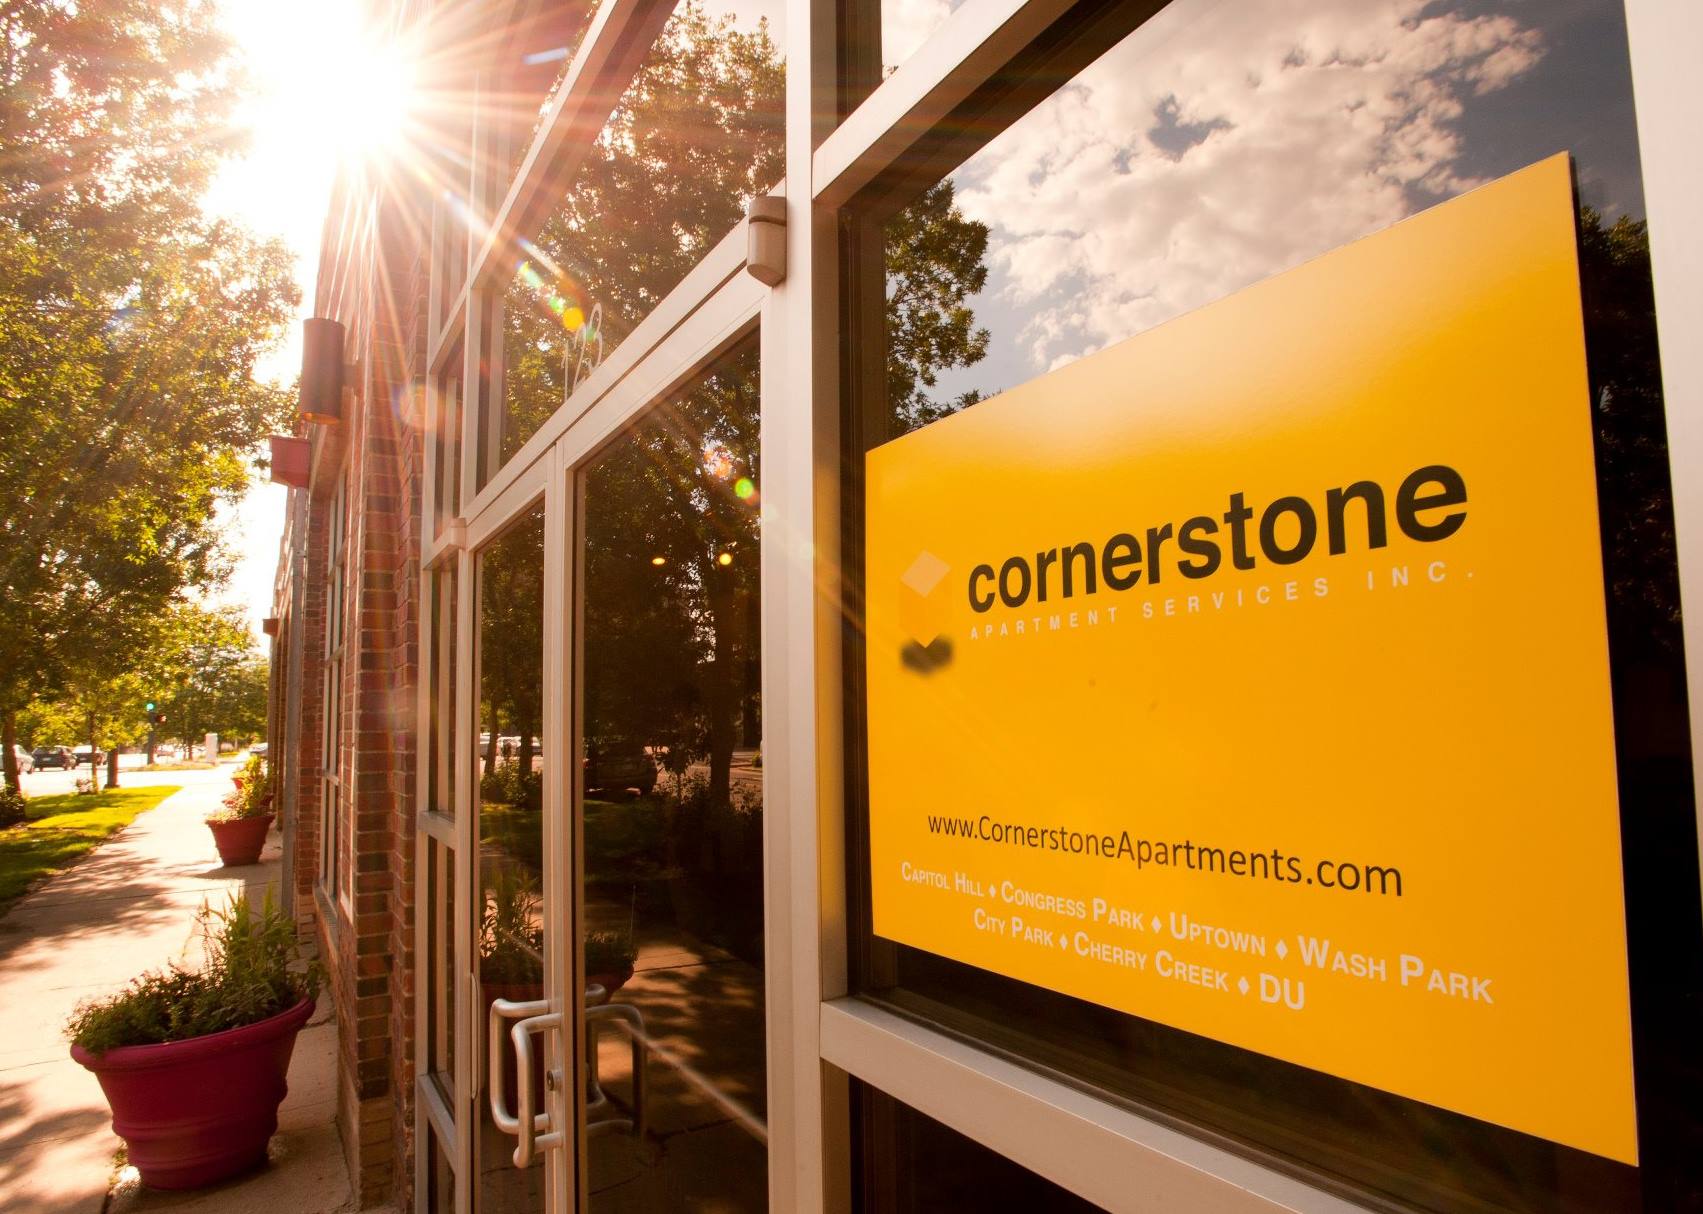 Cornerstone Apartment Services